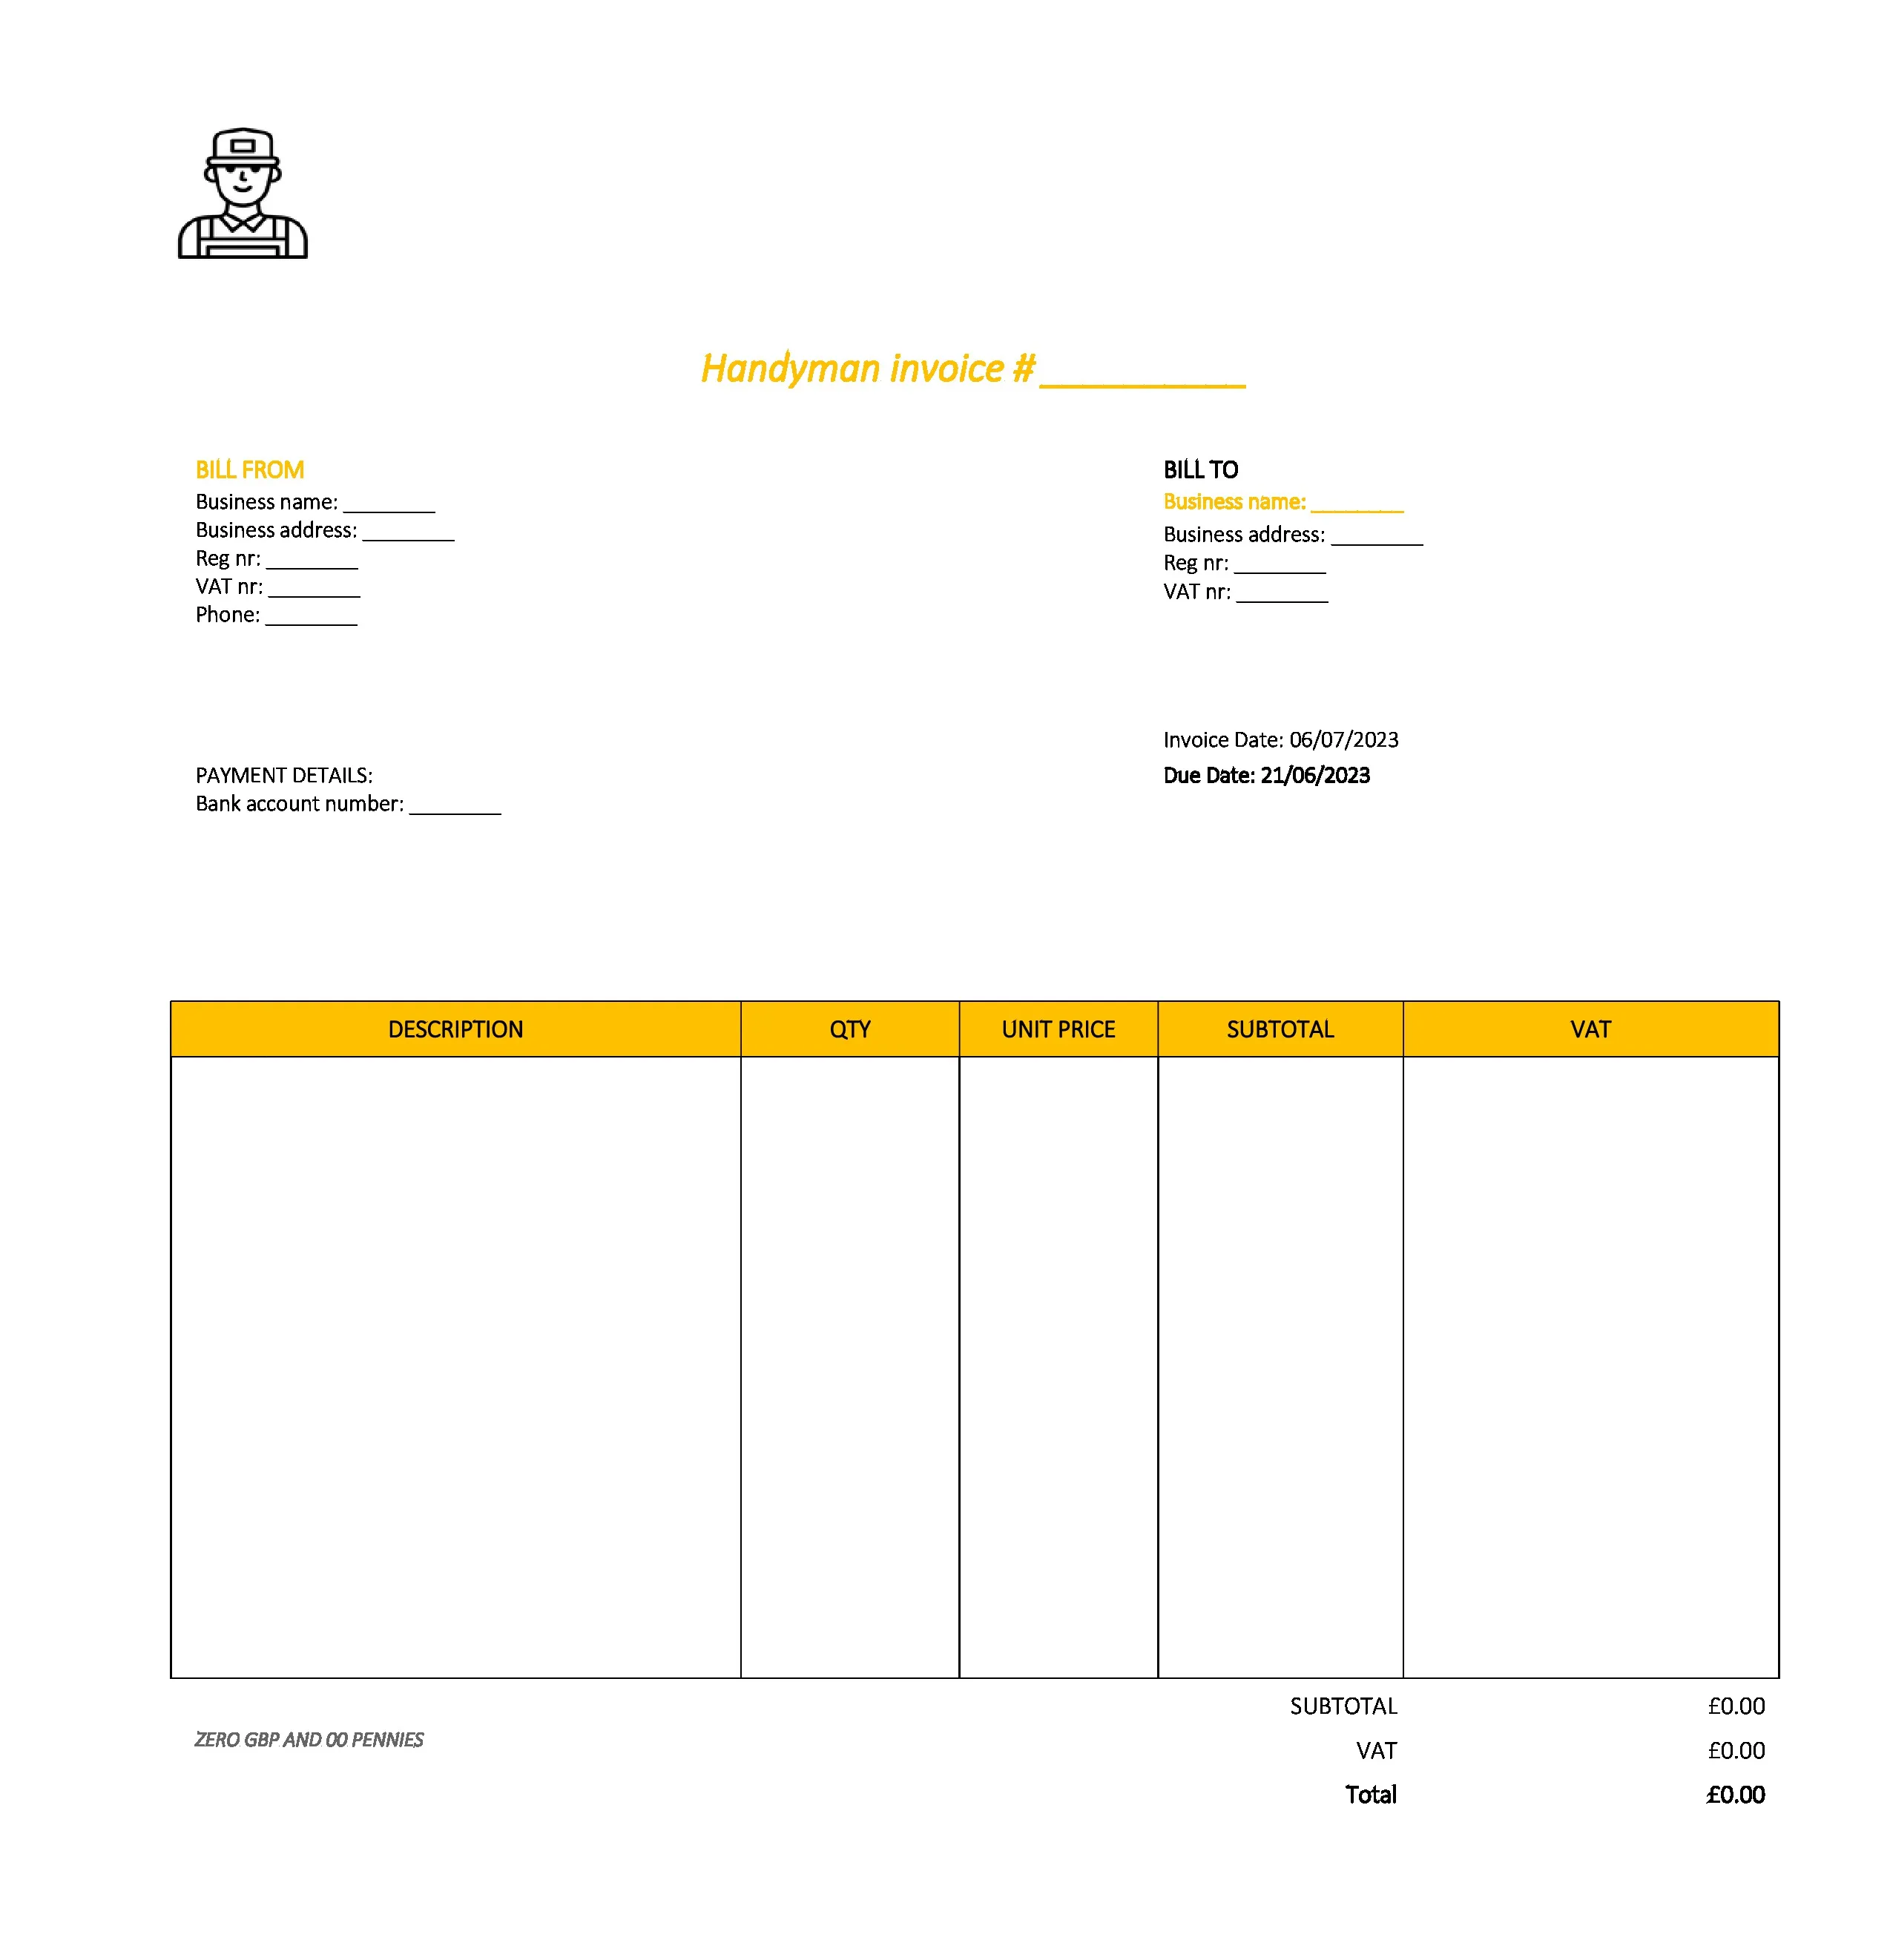 draft handyman invoice template UK Excel / Google sheets